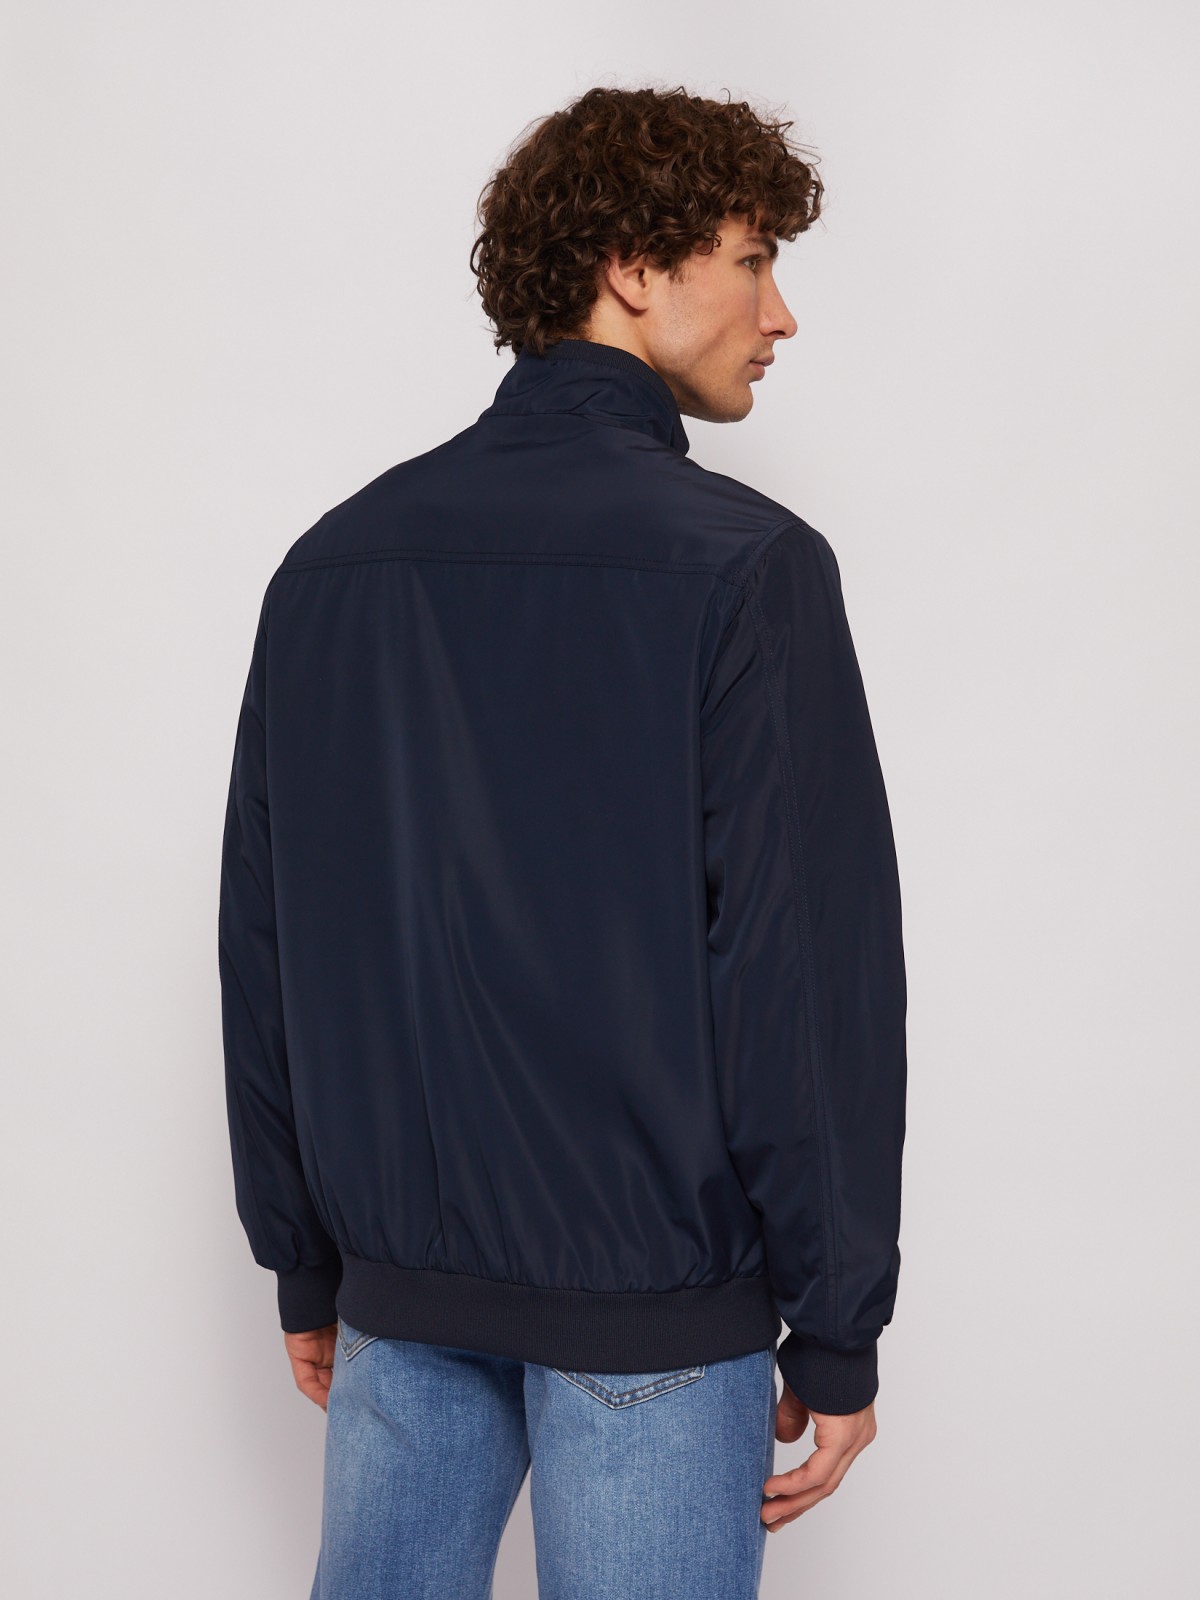 Куртка-бомбер на молнии с воротником-стойкой zolla 014215602024, цвет темно-синий, размер XL - фото 5